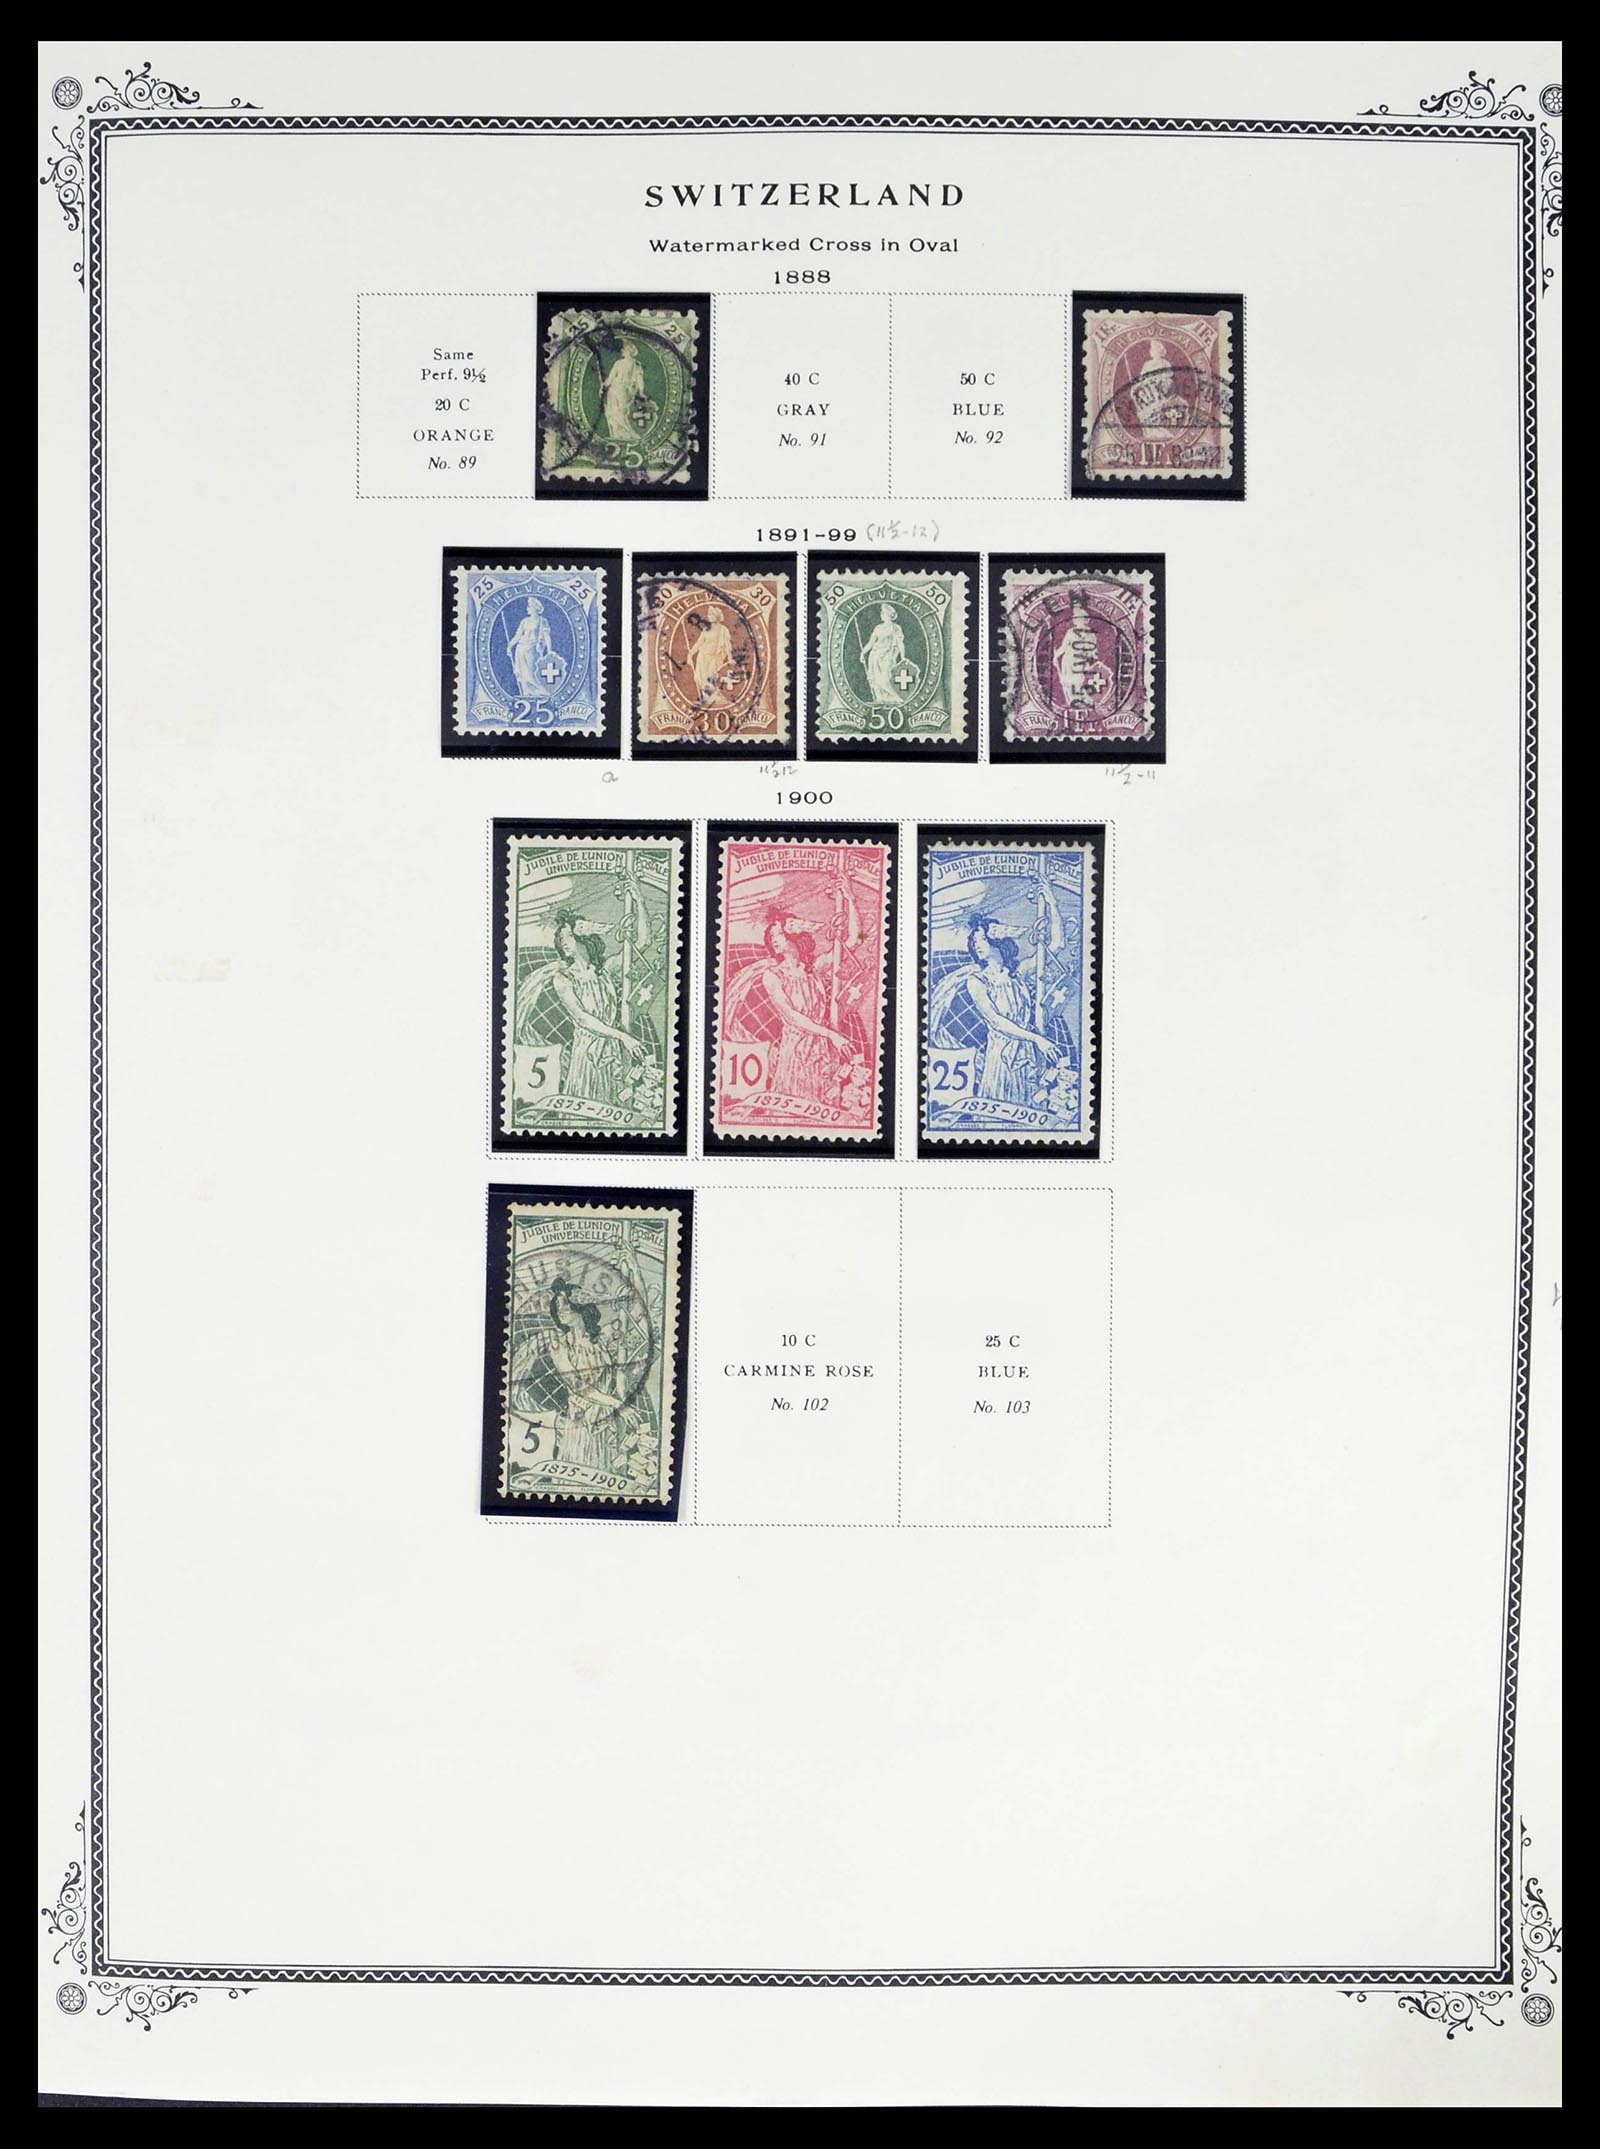 39178 0007 - Stamp collection 39178 Switzerland 1850-1989.